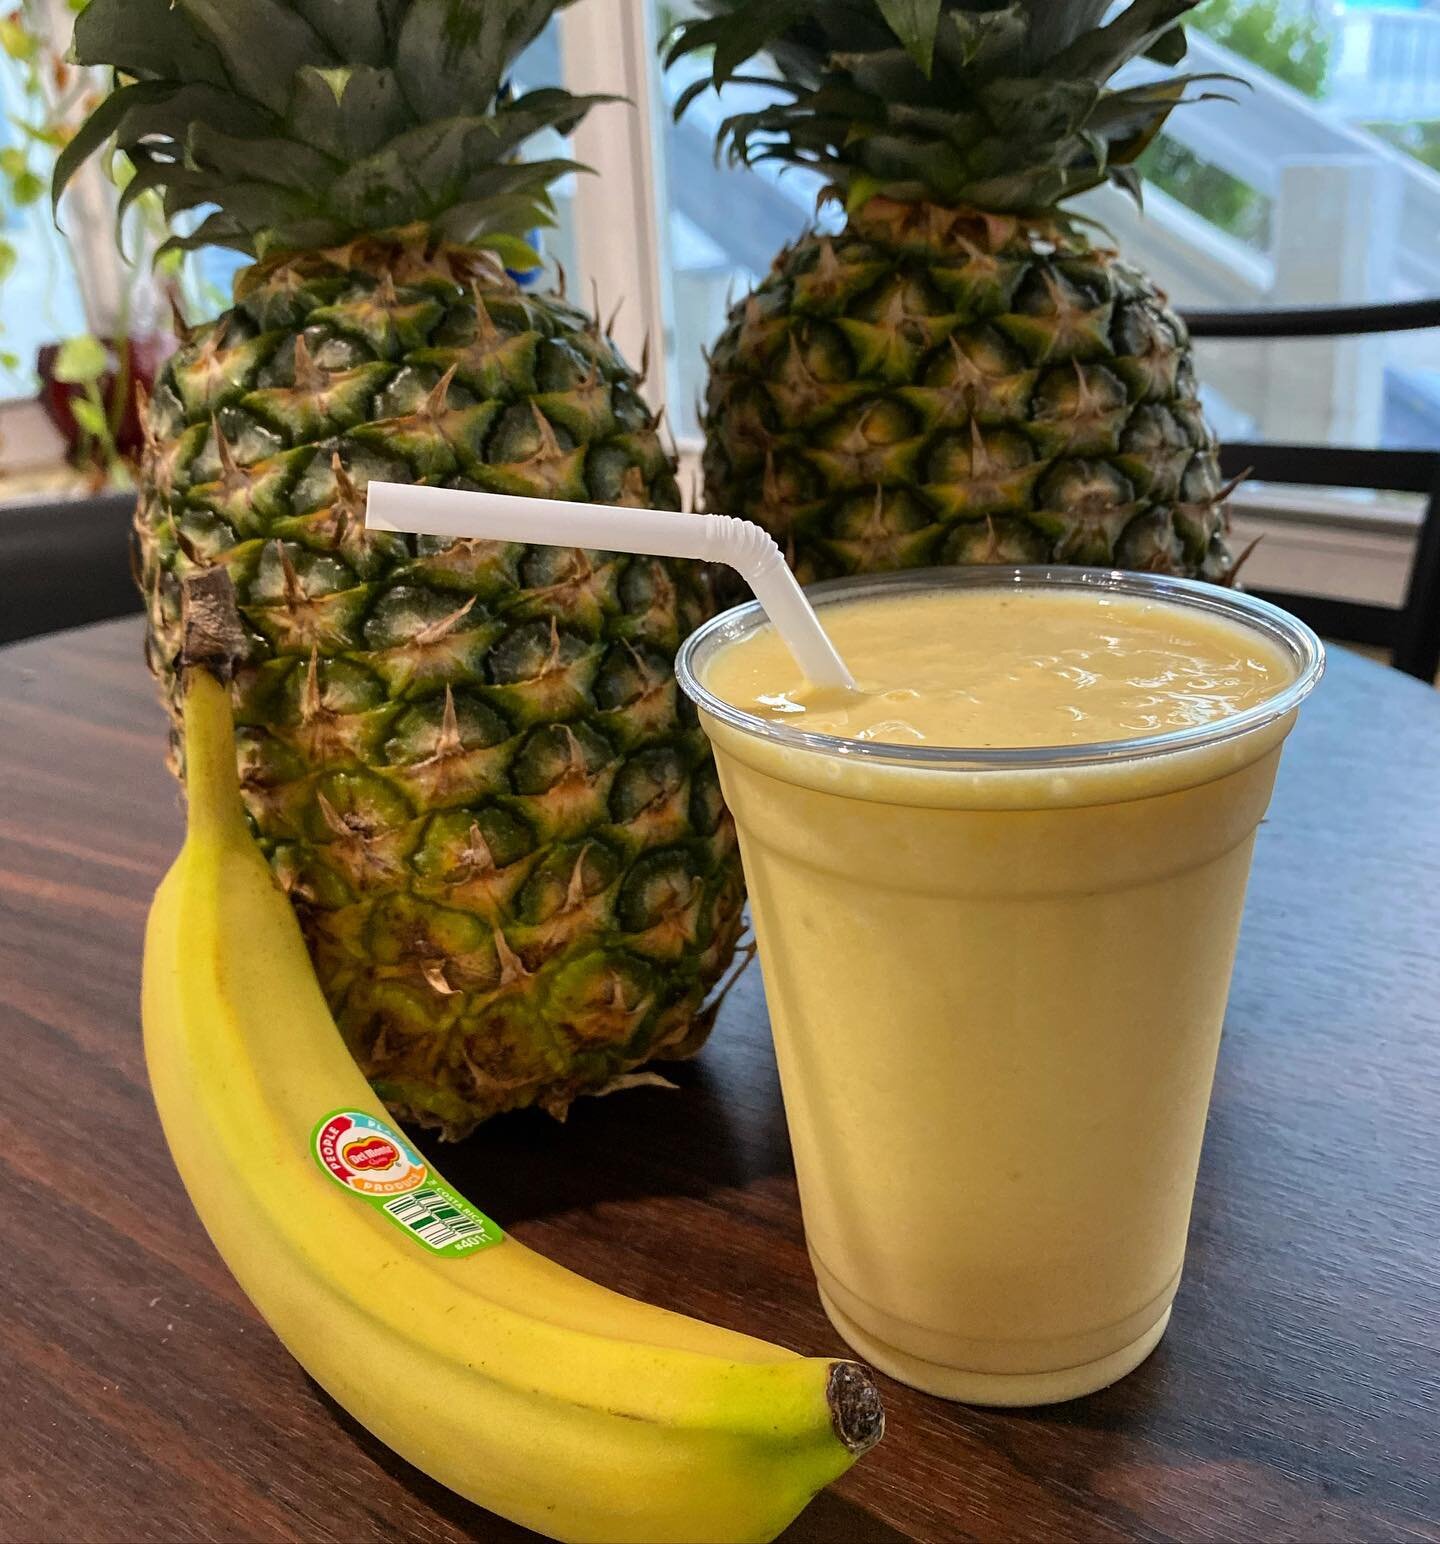 Tropical Sunrise Smoothie! Made with pineapple, banana, mango, honey, orange juice and a little bit of milk&hellip;Yum!!!🥭🍍🍌
.
.
.
#atthemarket #northbeachvillage #northbeachvillageresort #nbv #villagelife #fortlauderdale #fortlauderdalebeach #for